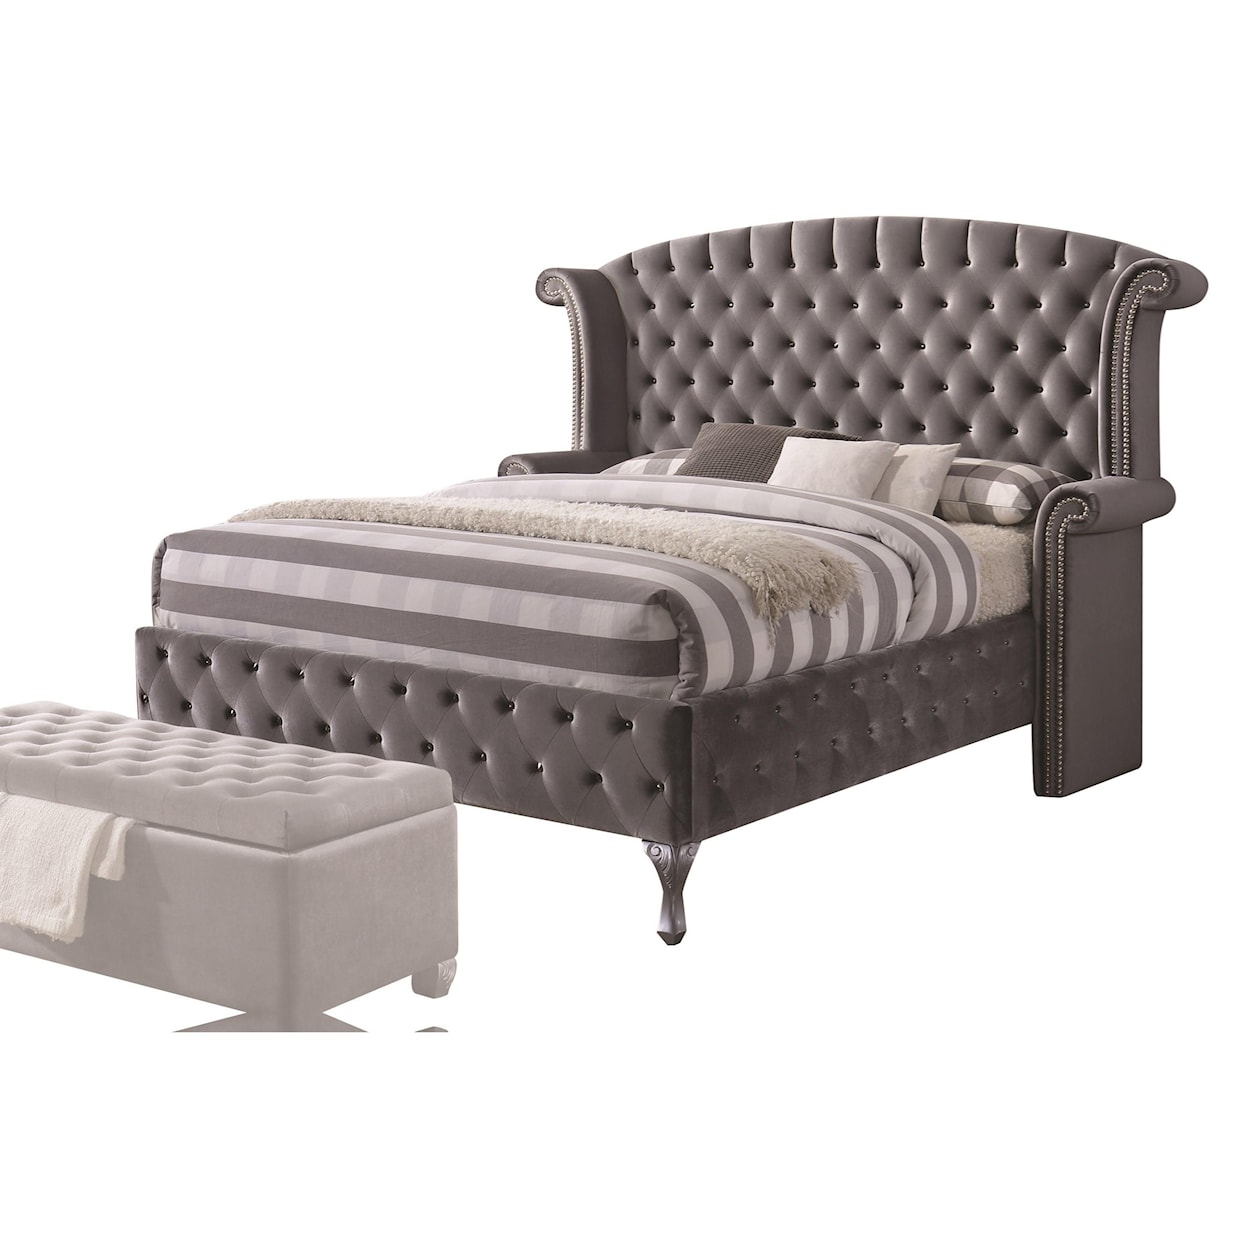 Acme Furniture Rebekah Eastern King Bed